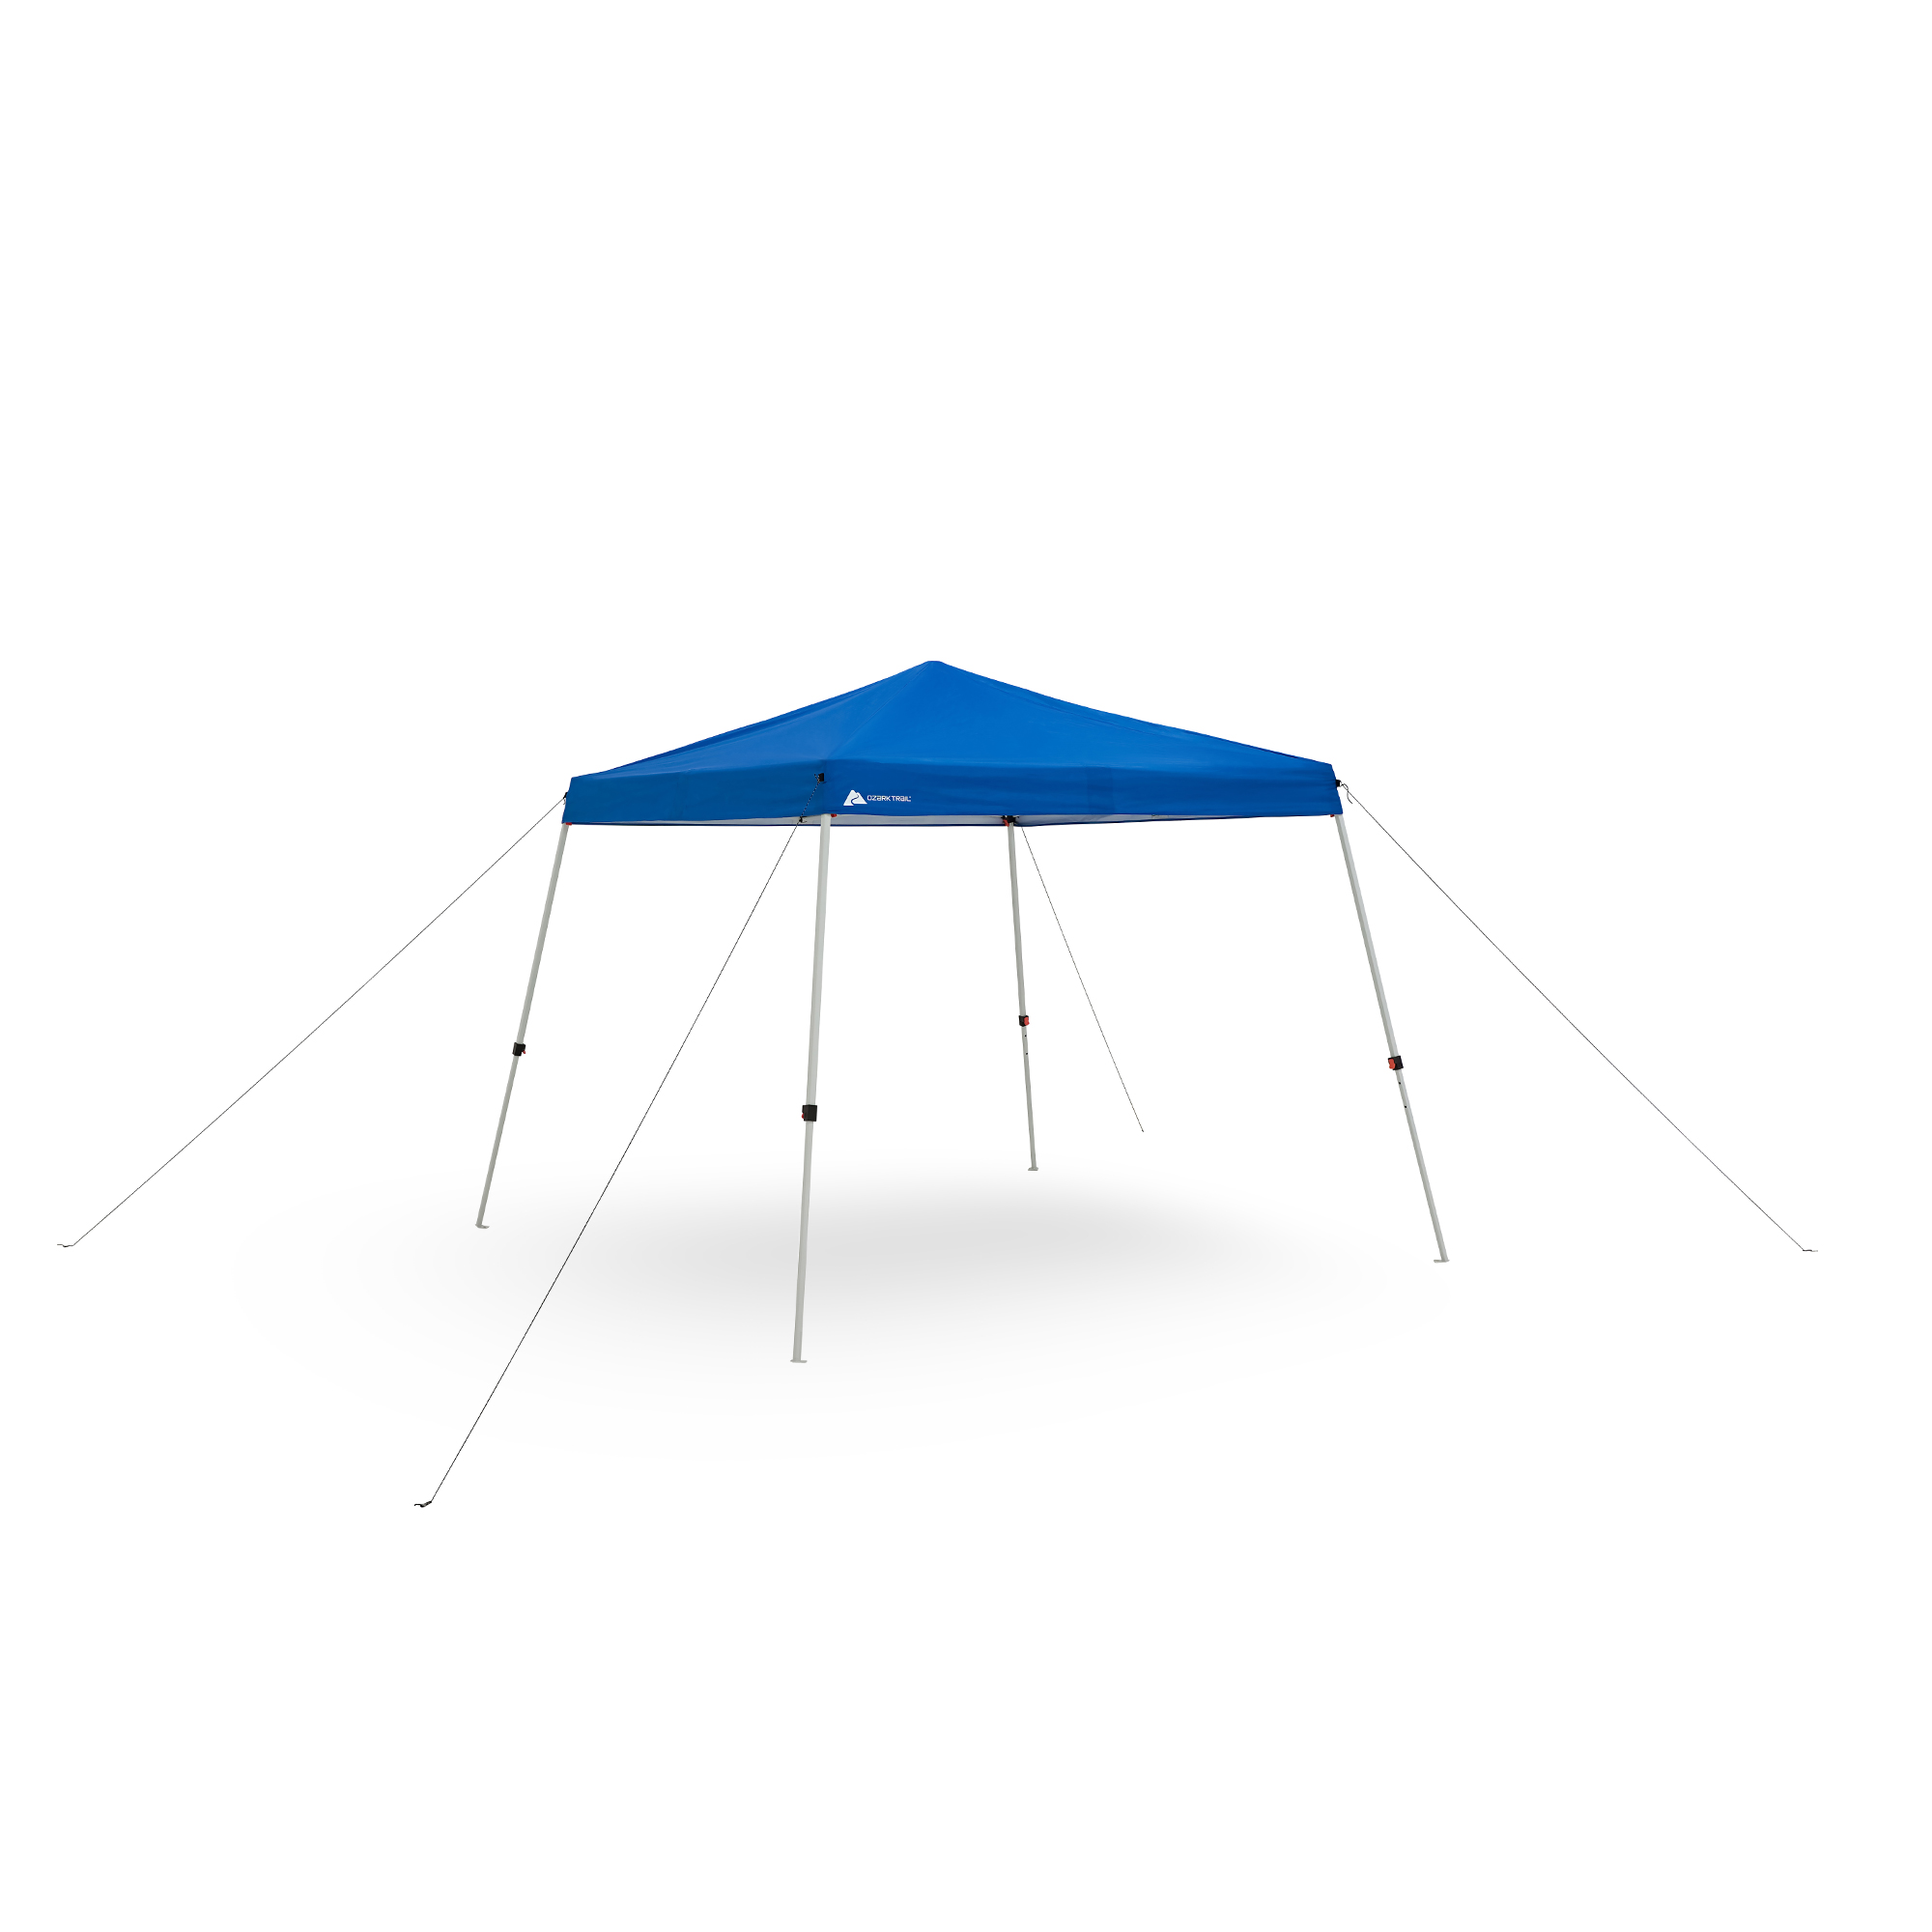 Ozark Trail 10' x 10' Instant Slant Leg Pop-up Canopy Outdoor Shading Shelter, Blue - image 1 of 8